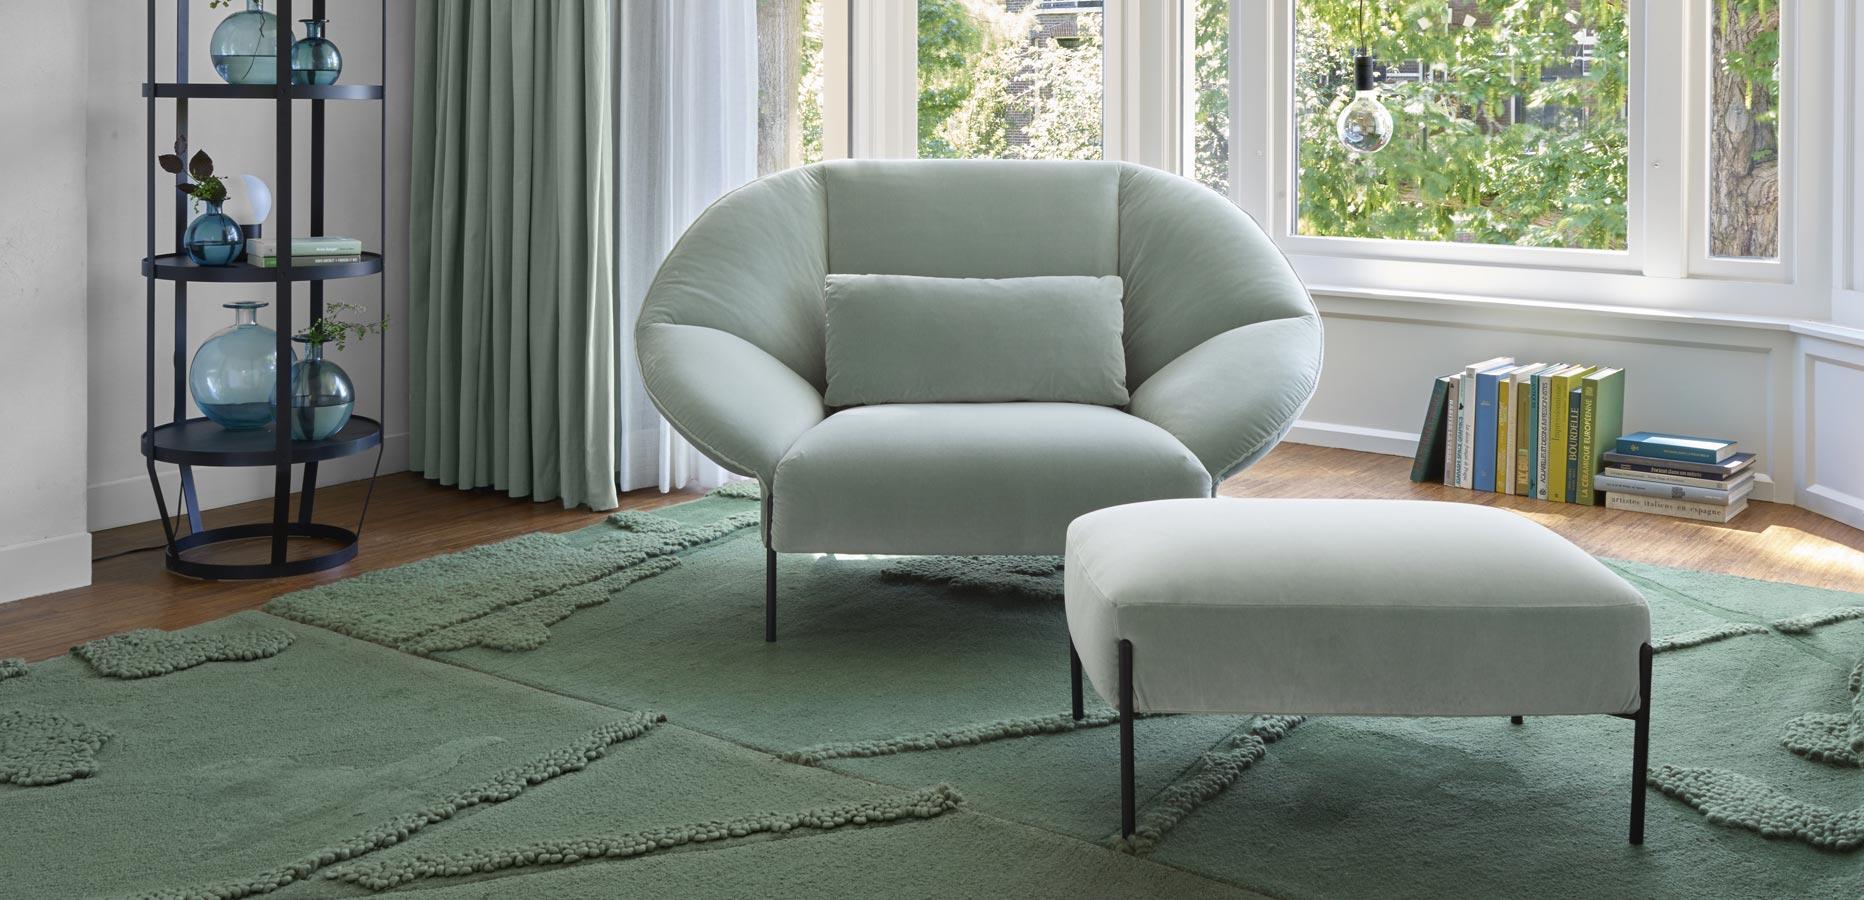 Round Shape Cover*Fine Cotton Canvas Floor Chair Seat Cushion Case Custom Siz*Ai 